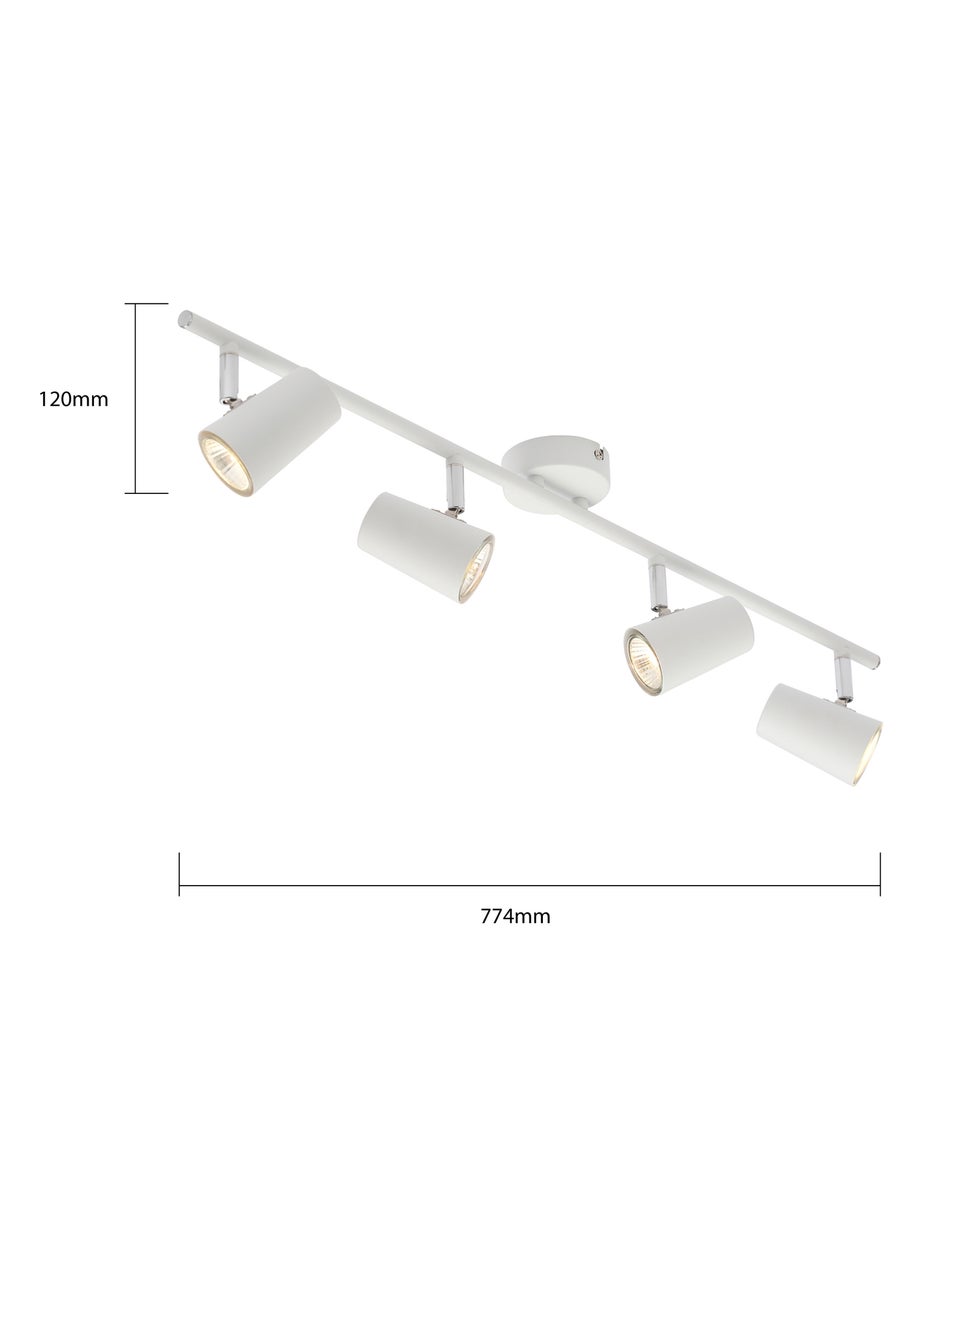 Inlight Harv GU10 4 Light Adjustable Ceiling Bar White